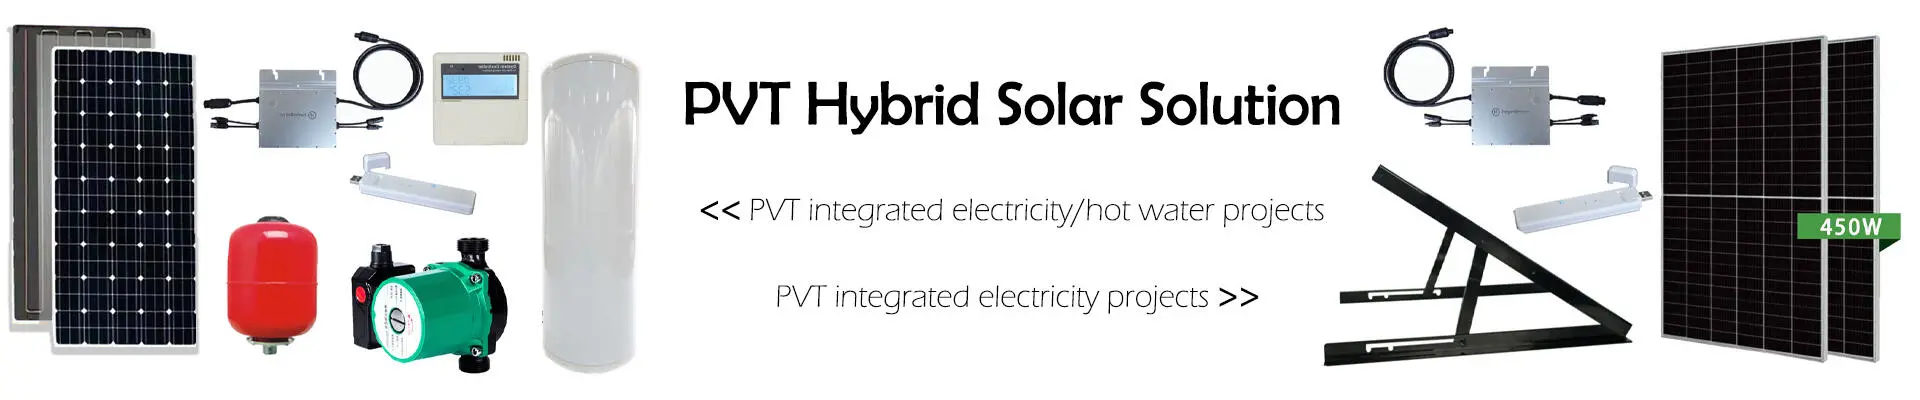 PVT Hybrid Solar Solution